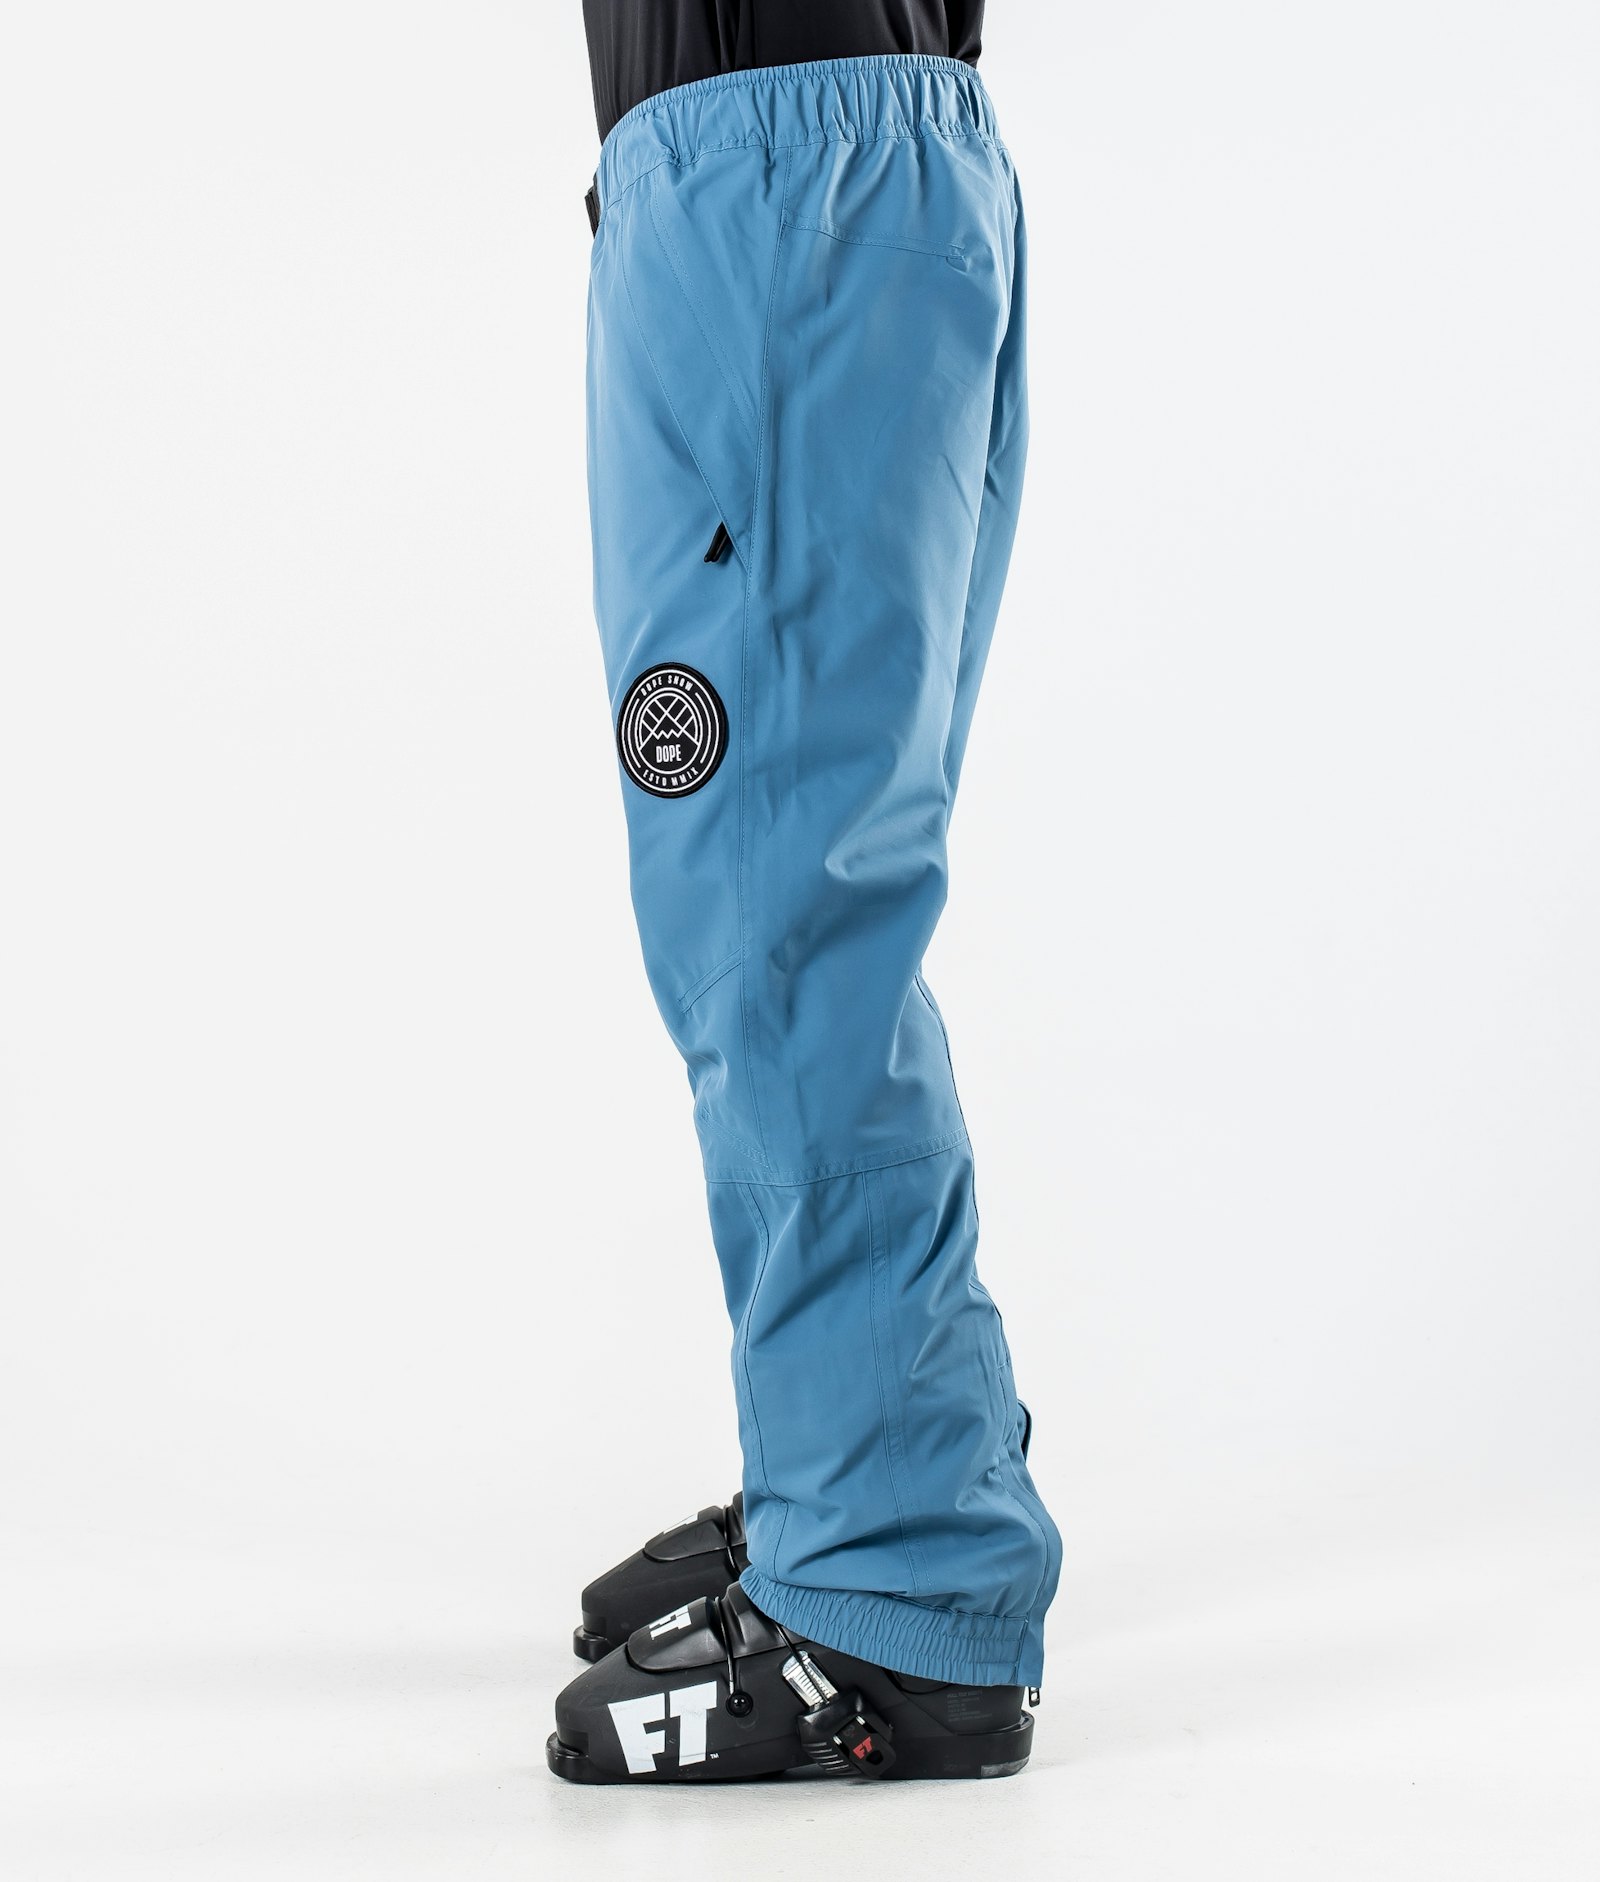 Blizzard 2020 Ski Pants Men Blue Steel